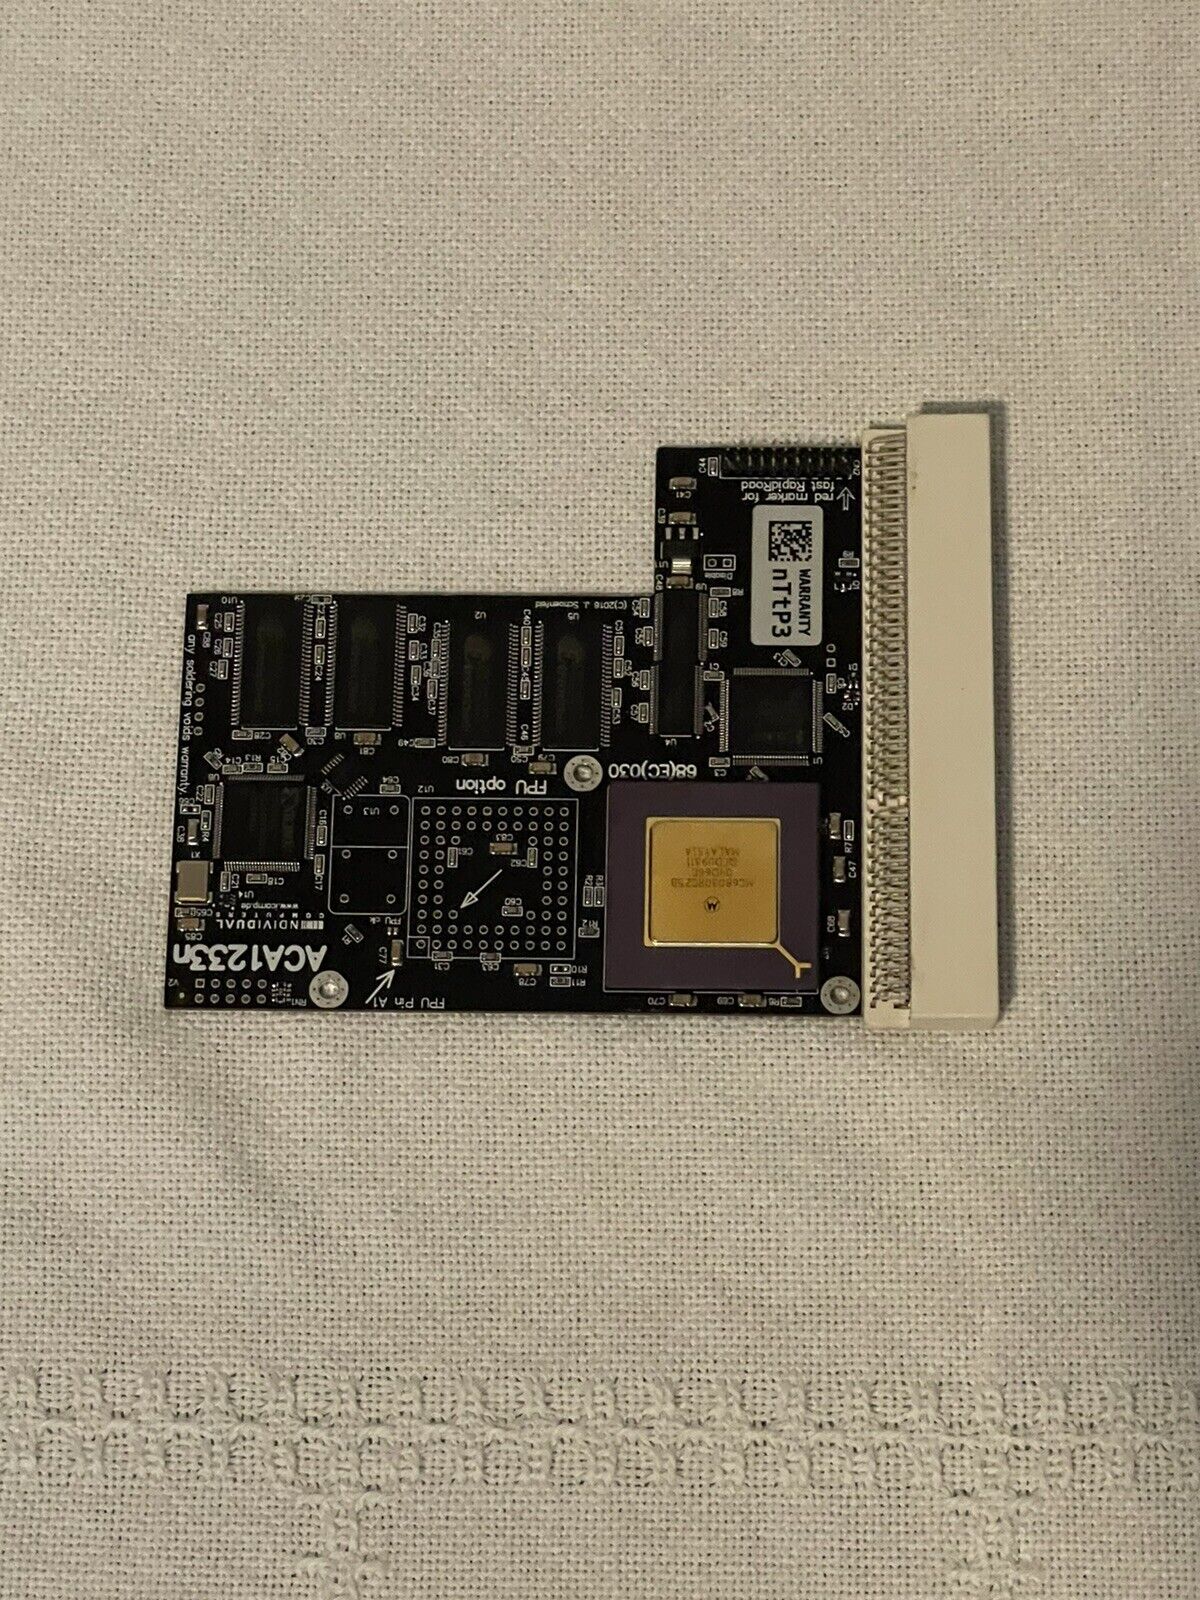 Amiga 1200 accelerator. Individual Computers￼ ACA1233n 26MHz 68030 Processor